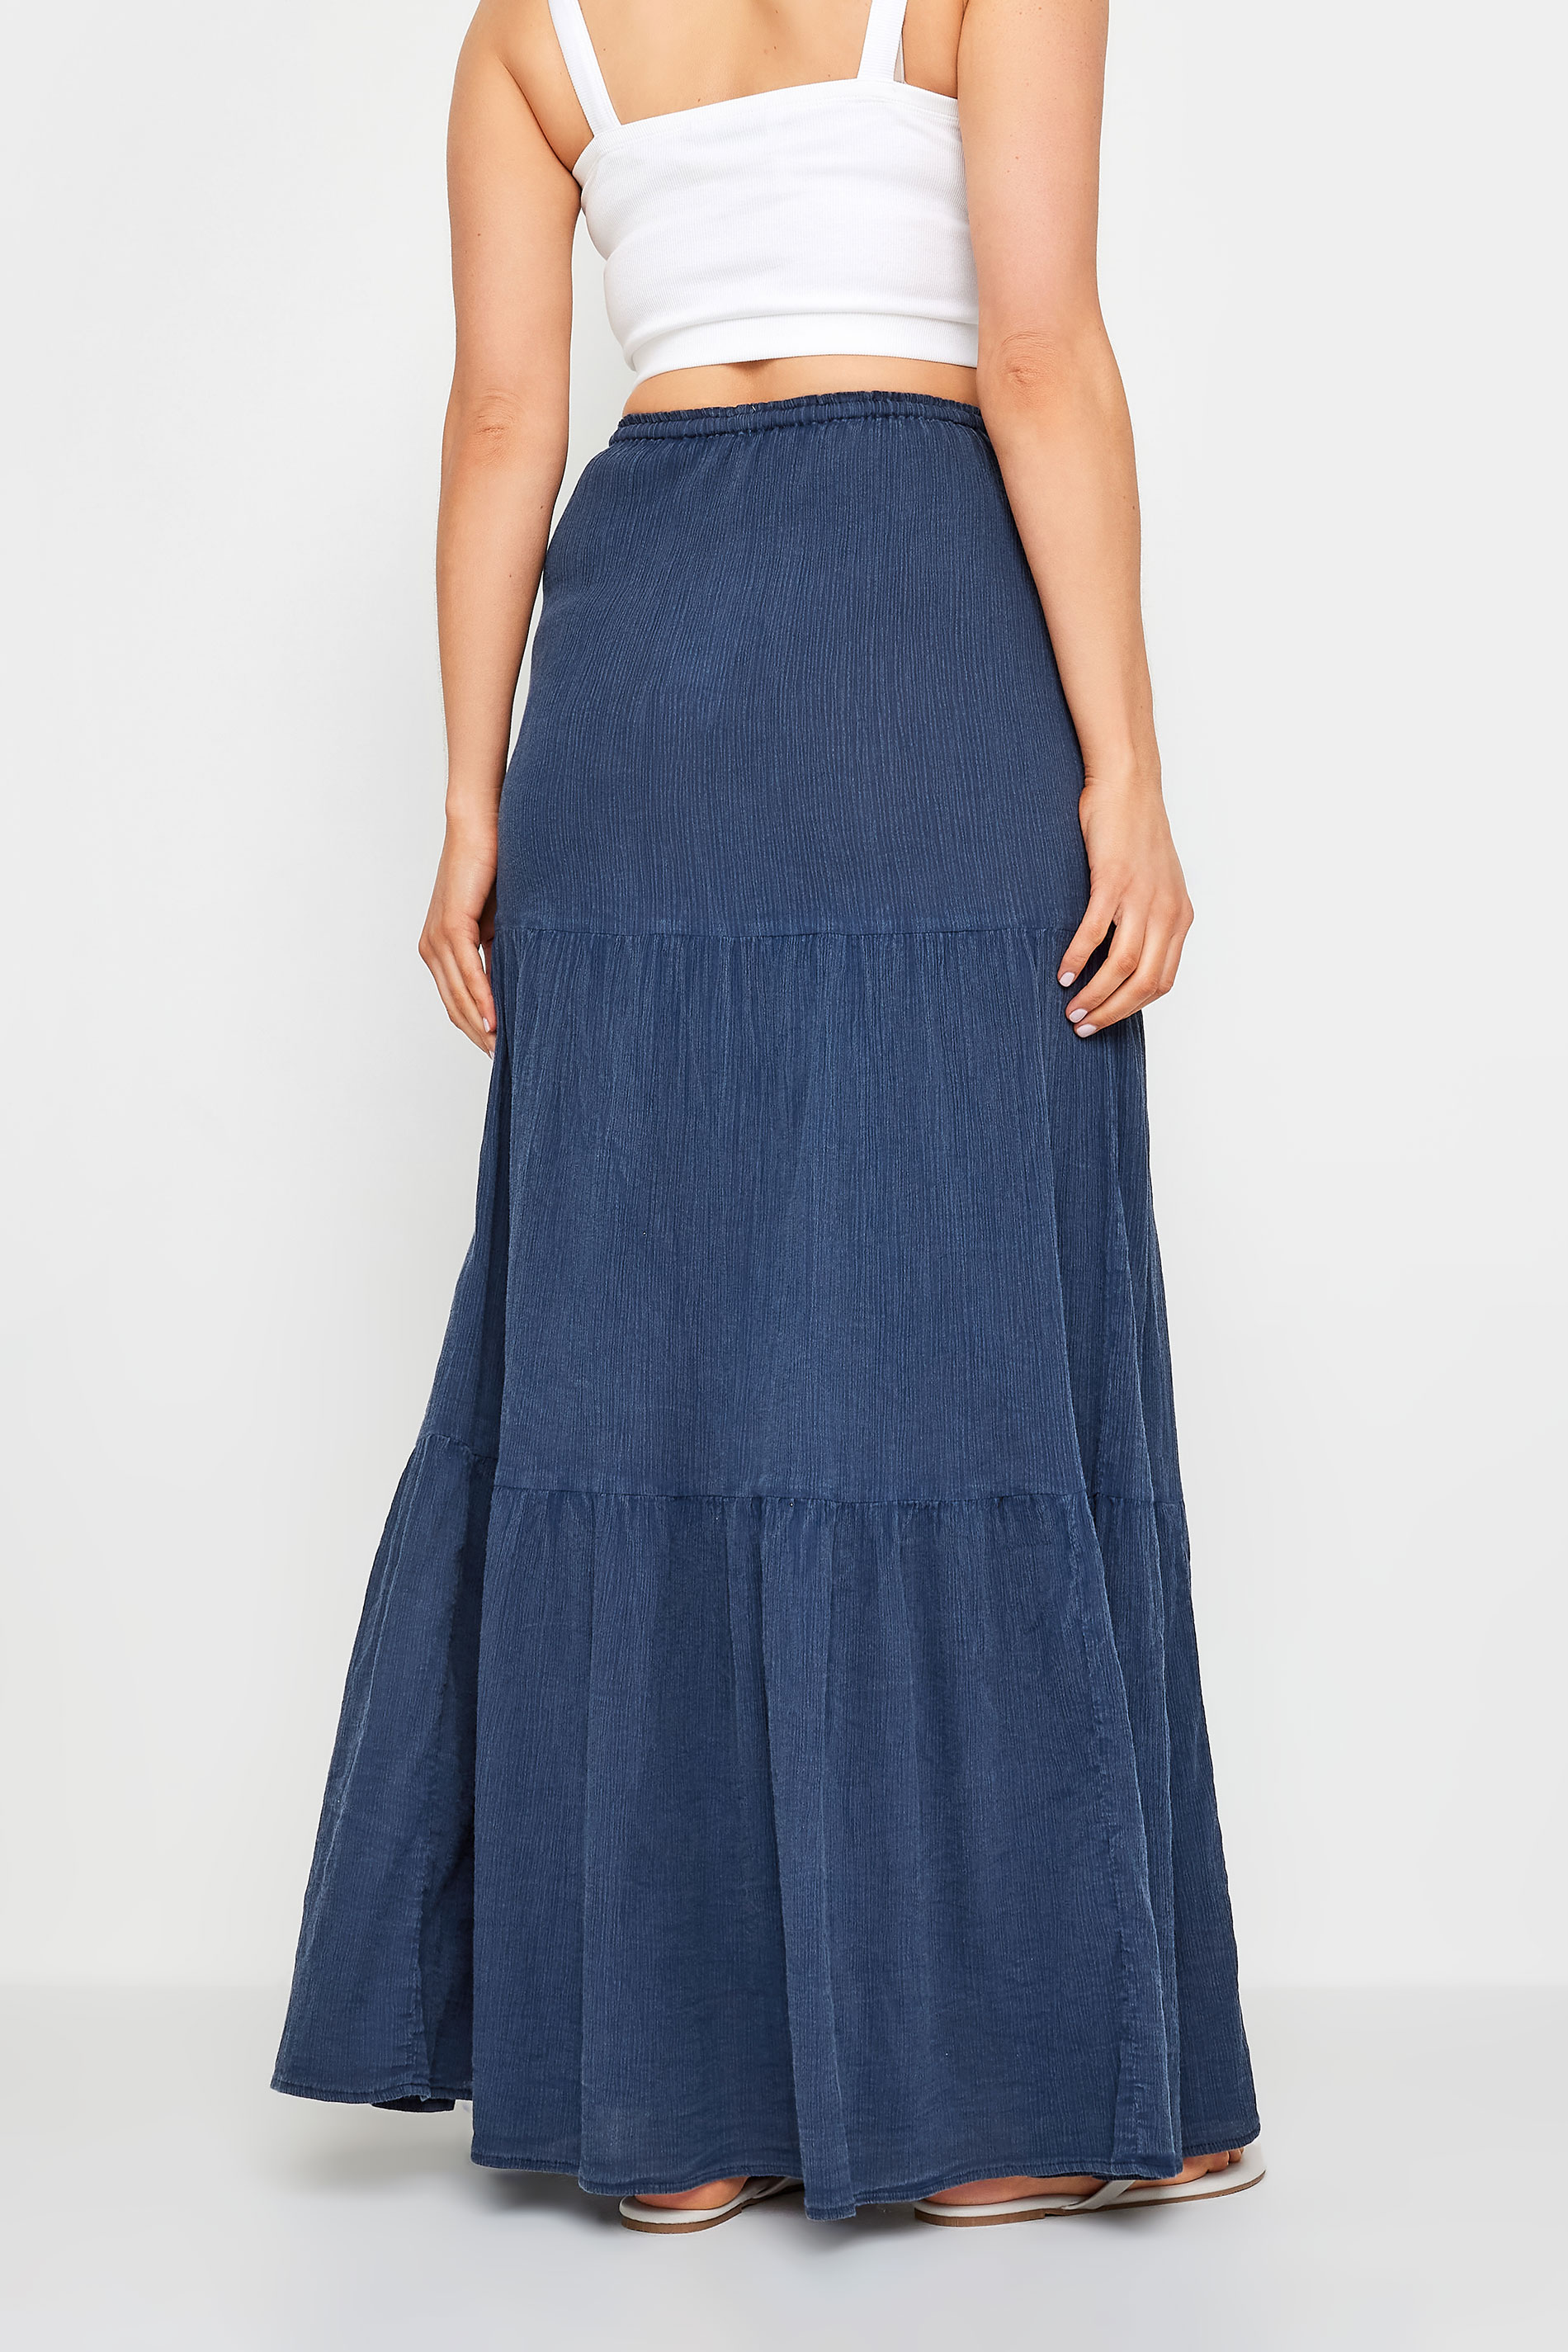 LTS Tall Women's Navy Blue Acid Wash Tiered Maxi Skirt | Long Tall Sally 3